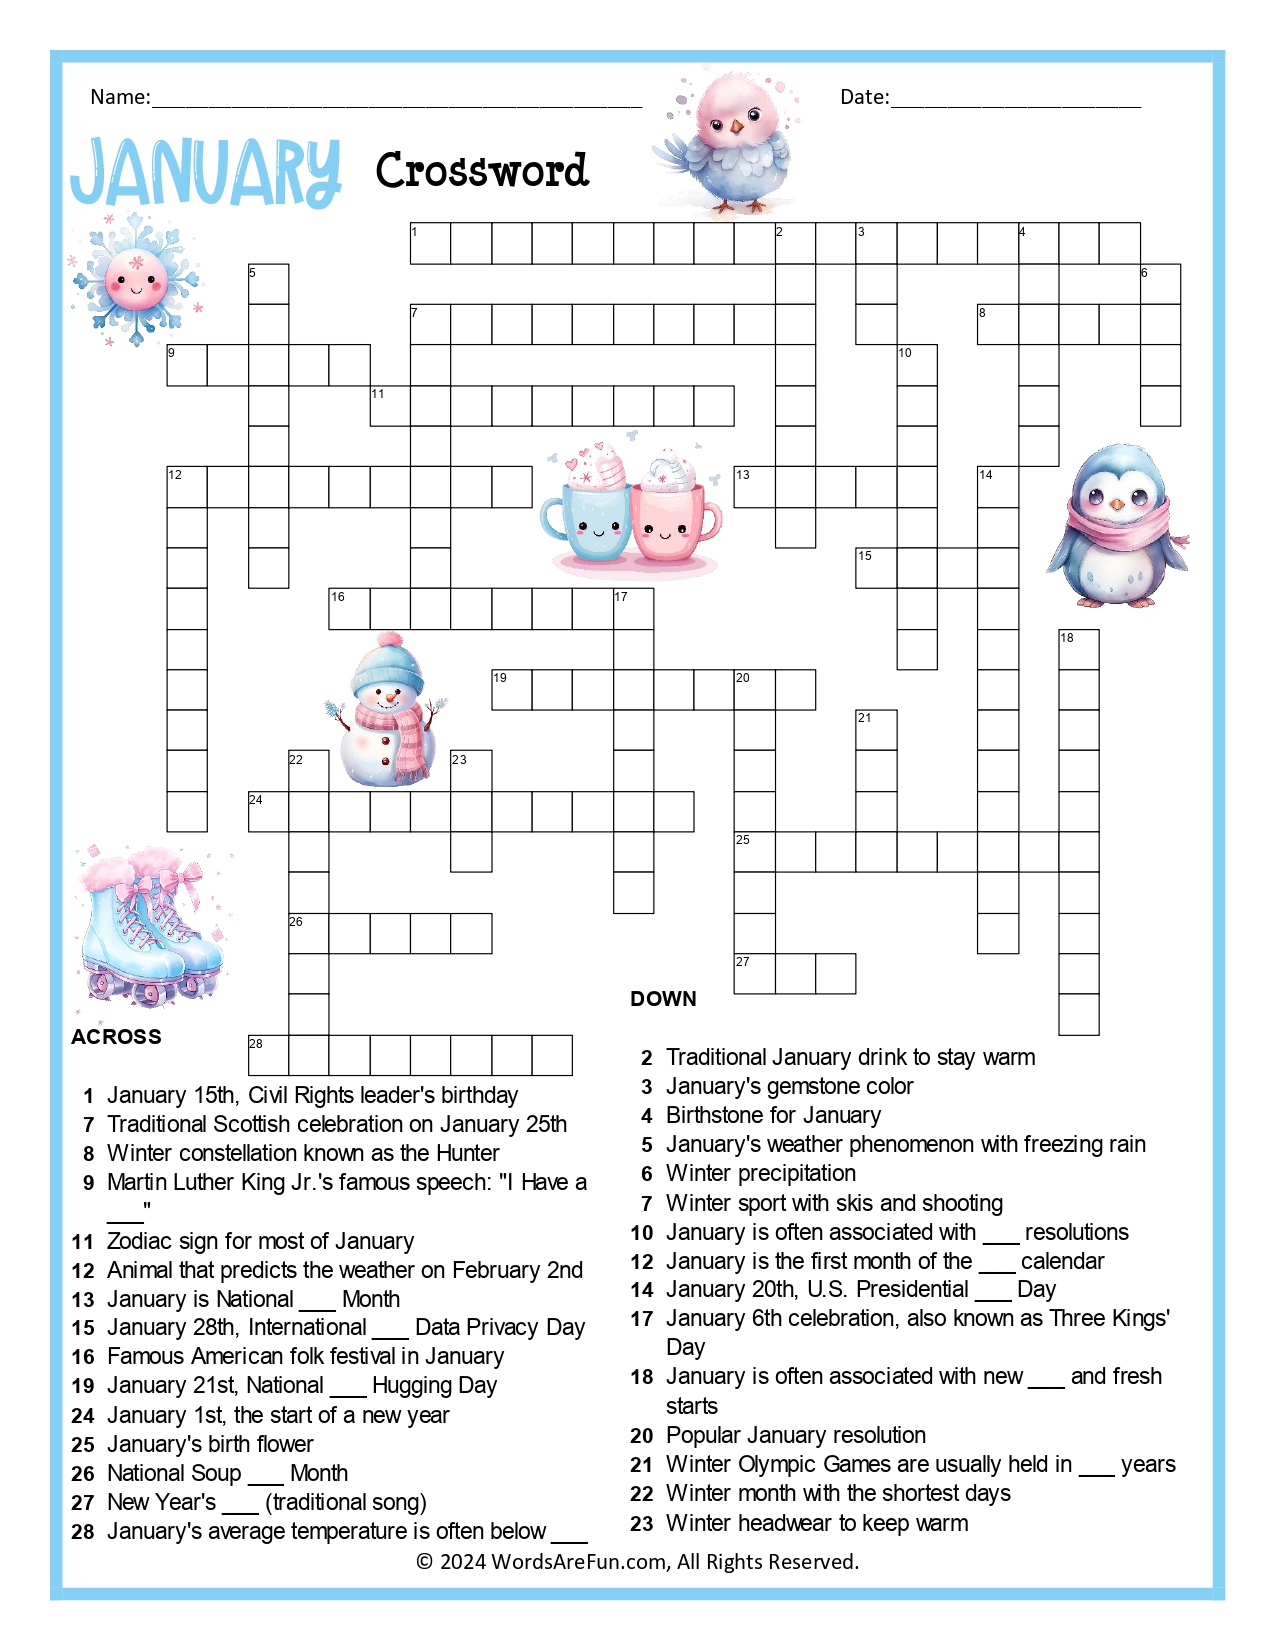 January Crossword Puzzle